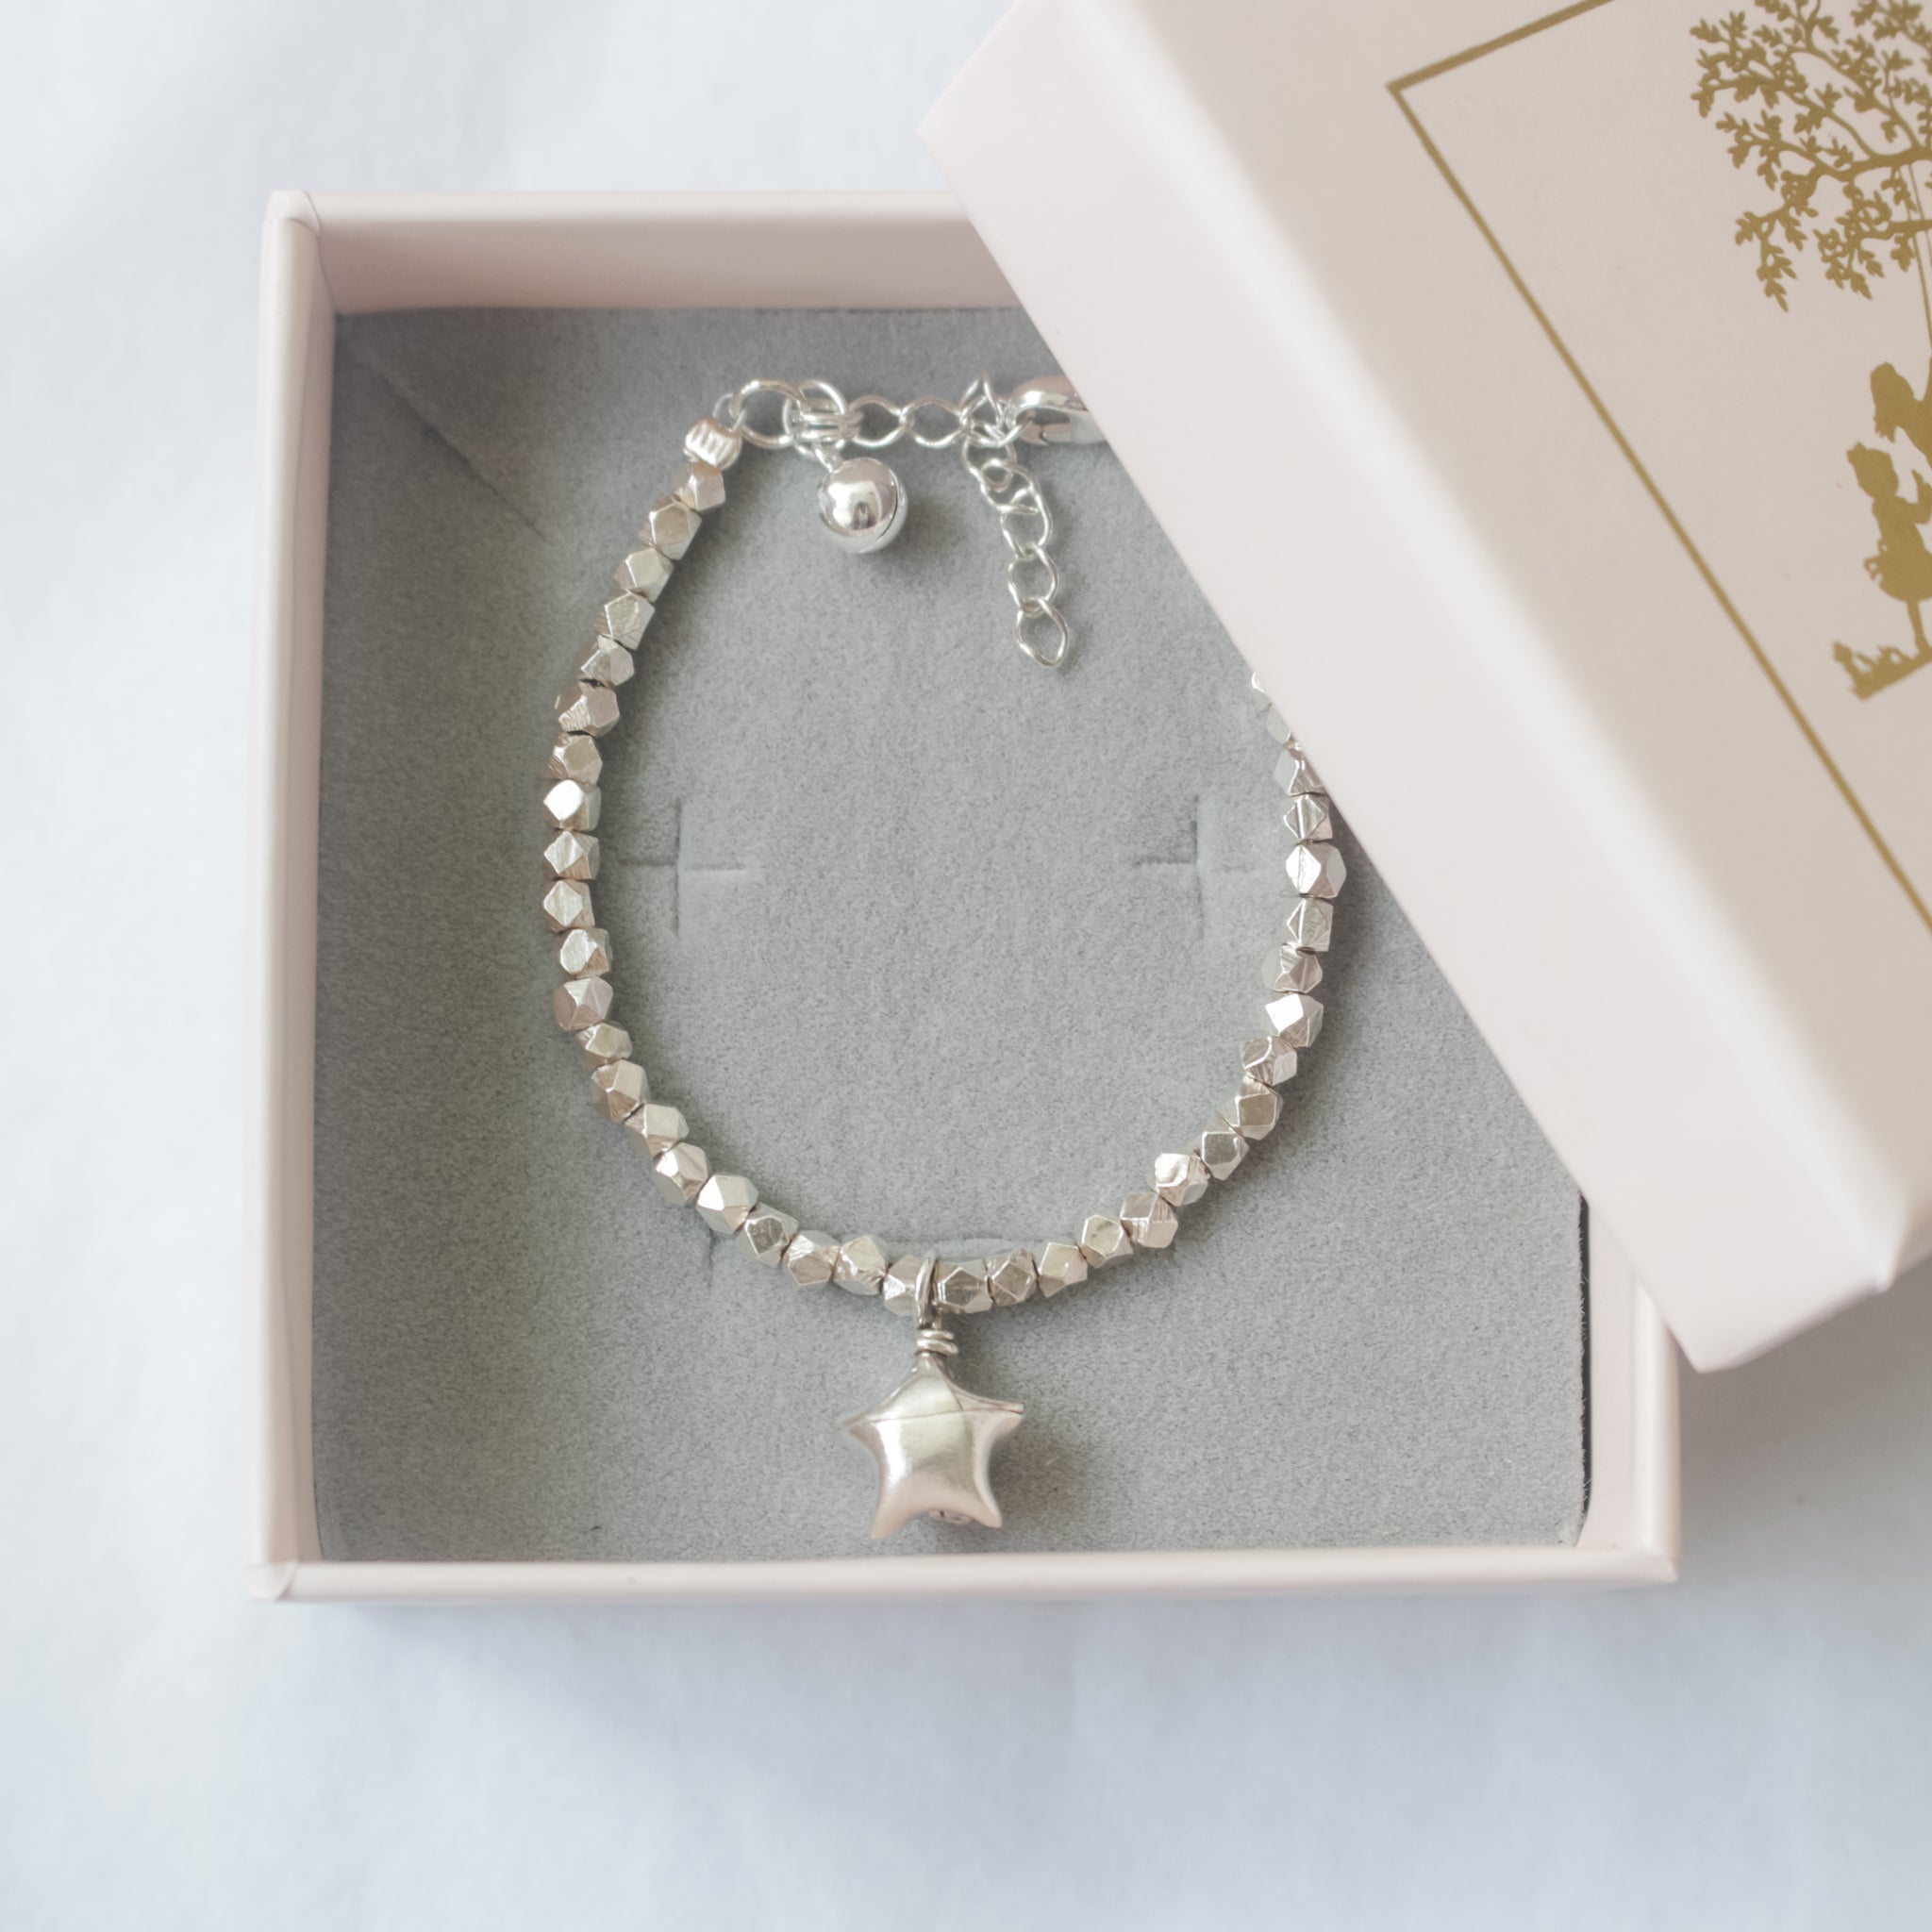 925 Silver Origami Lucky Star Bracelet for Children (Name engraving available)